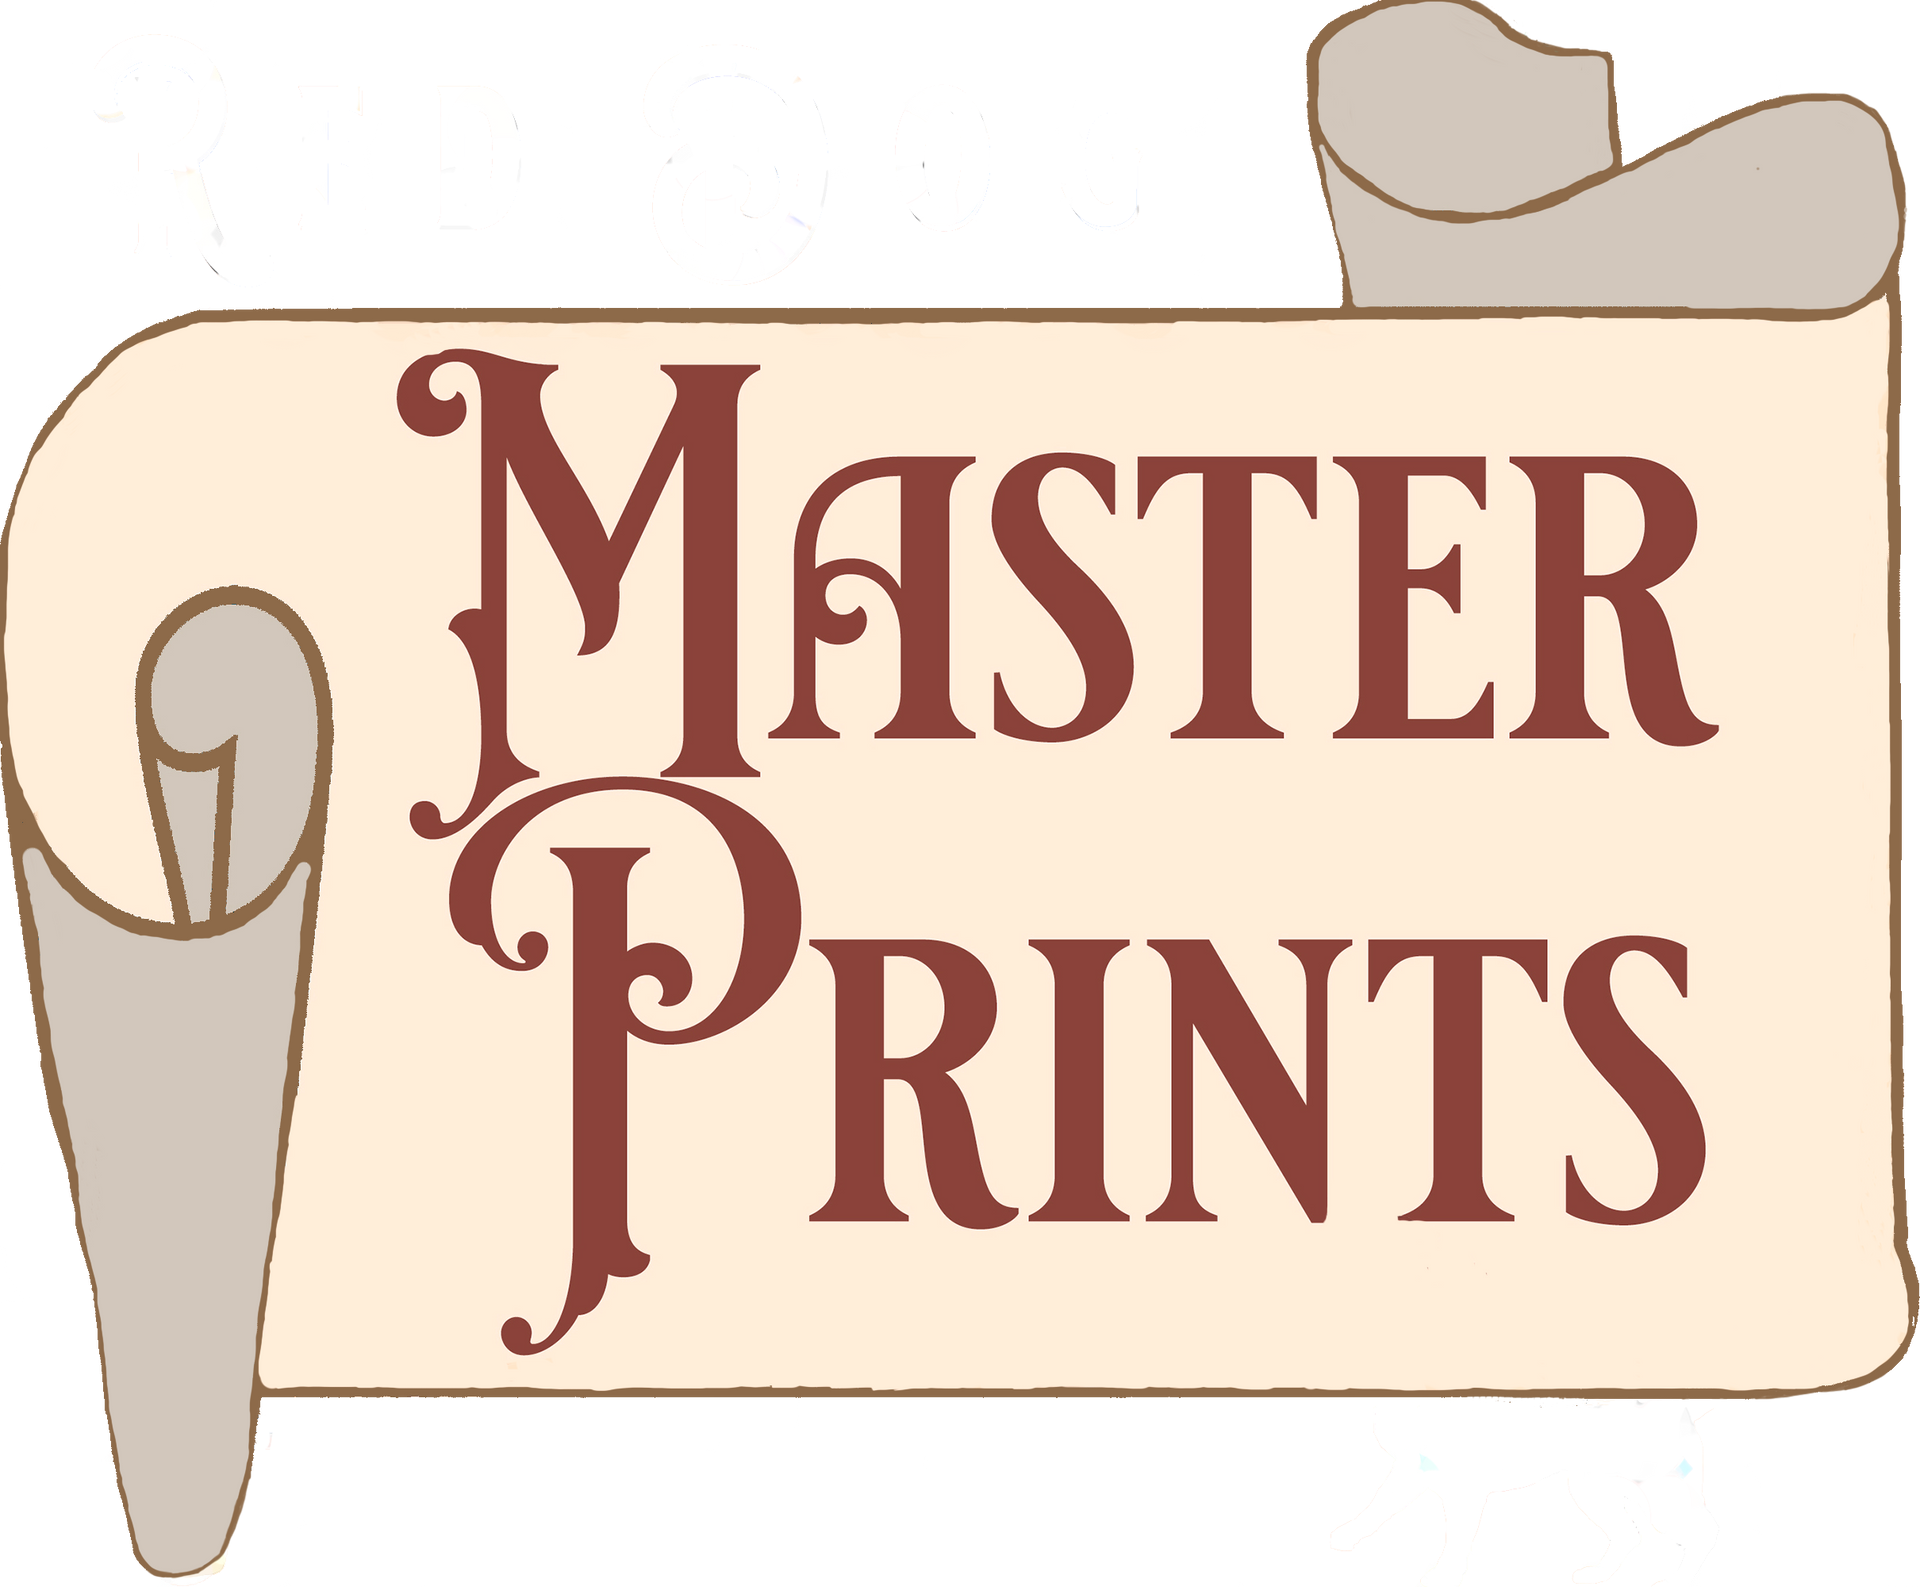 Red Dog Master Prints